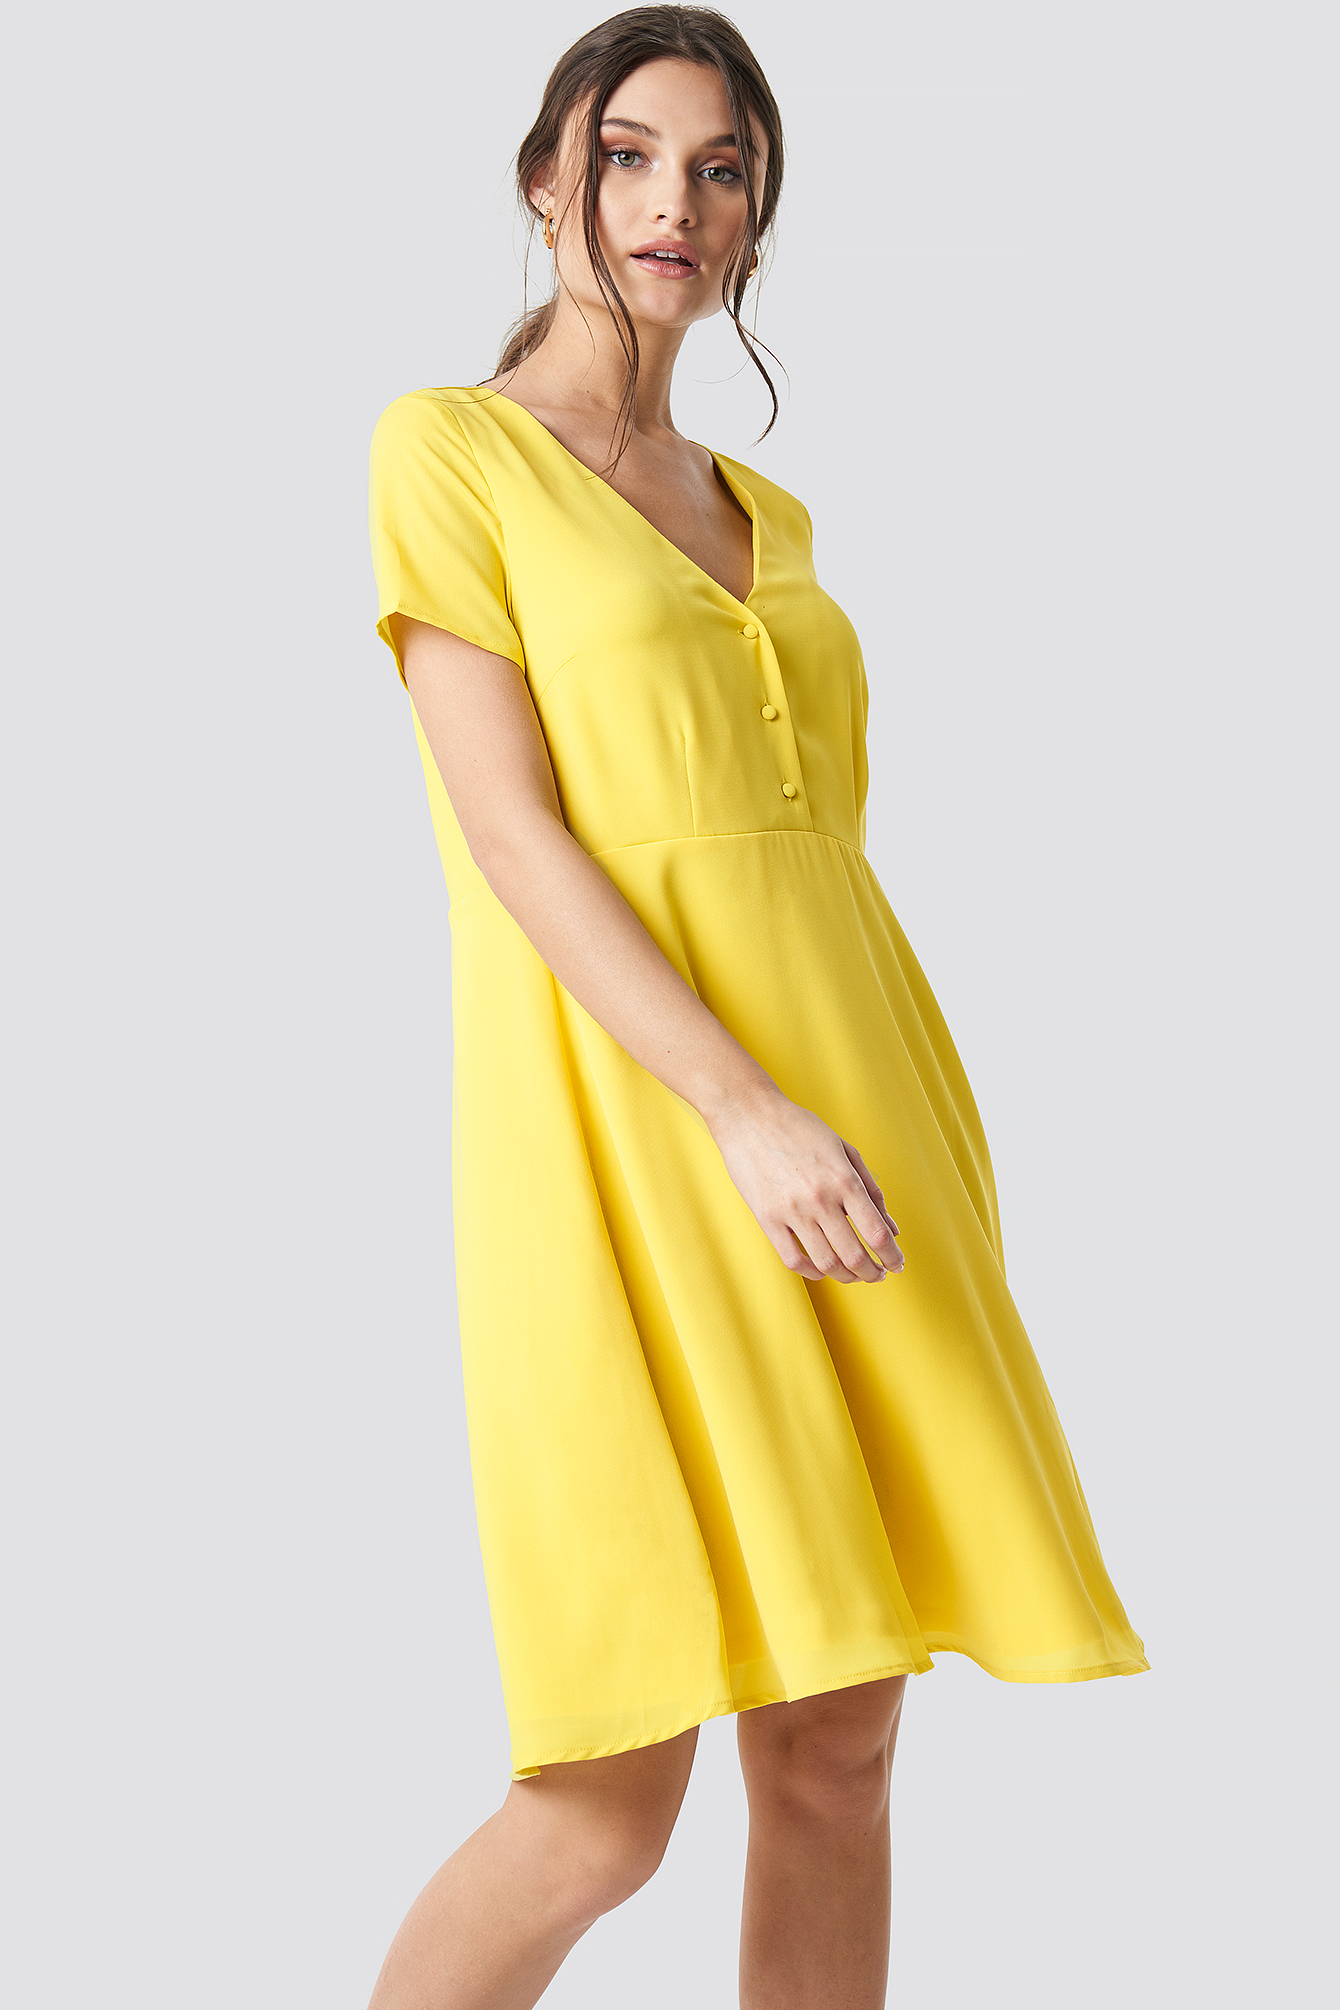 button up yellow dress